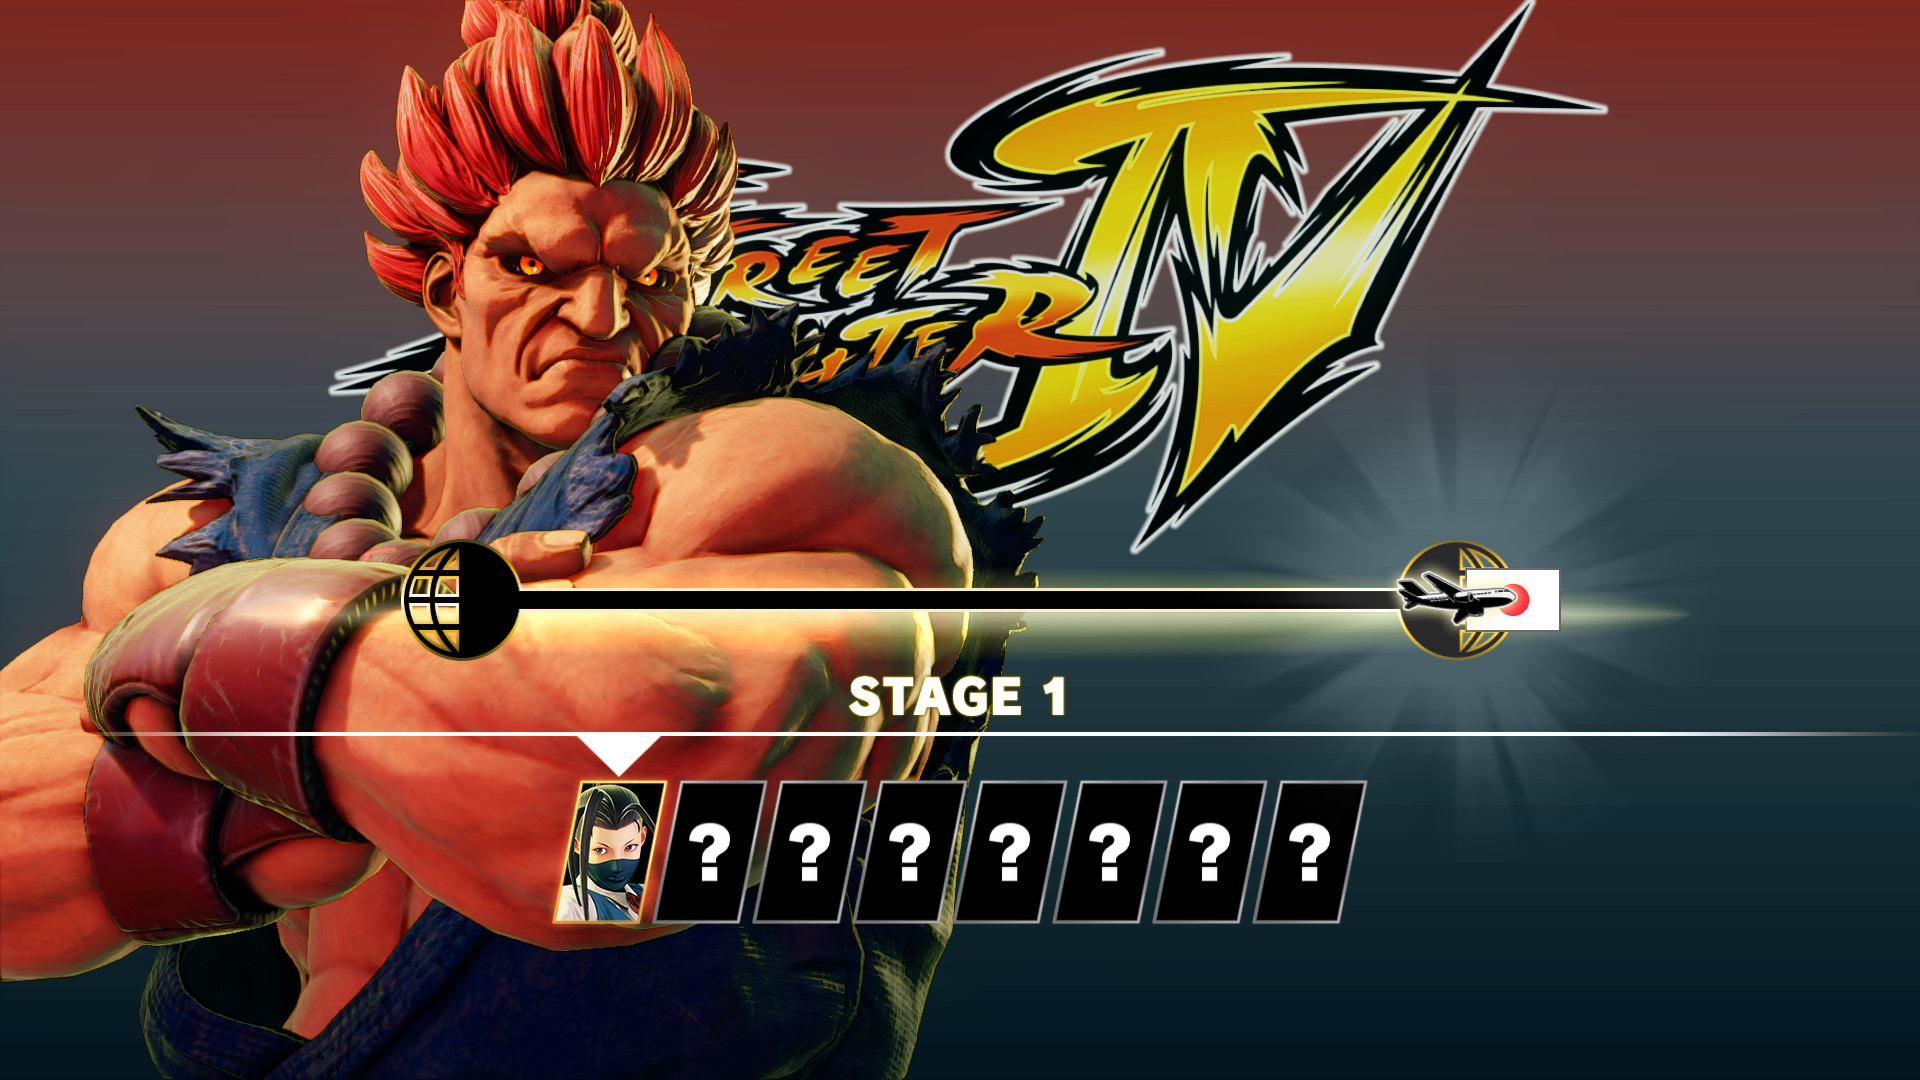 Street Fighter V 5 Champion Edition [Upgrade Kit] PC Steam Key GLOBAL FAST  SENT!